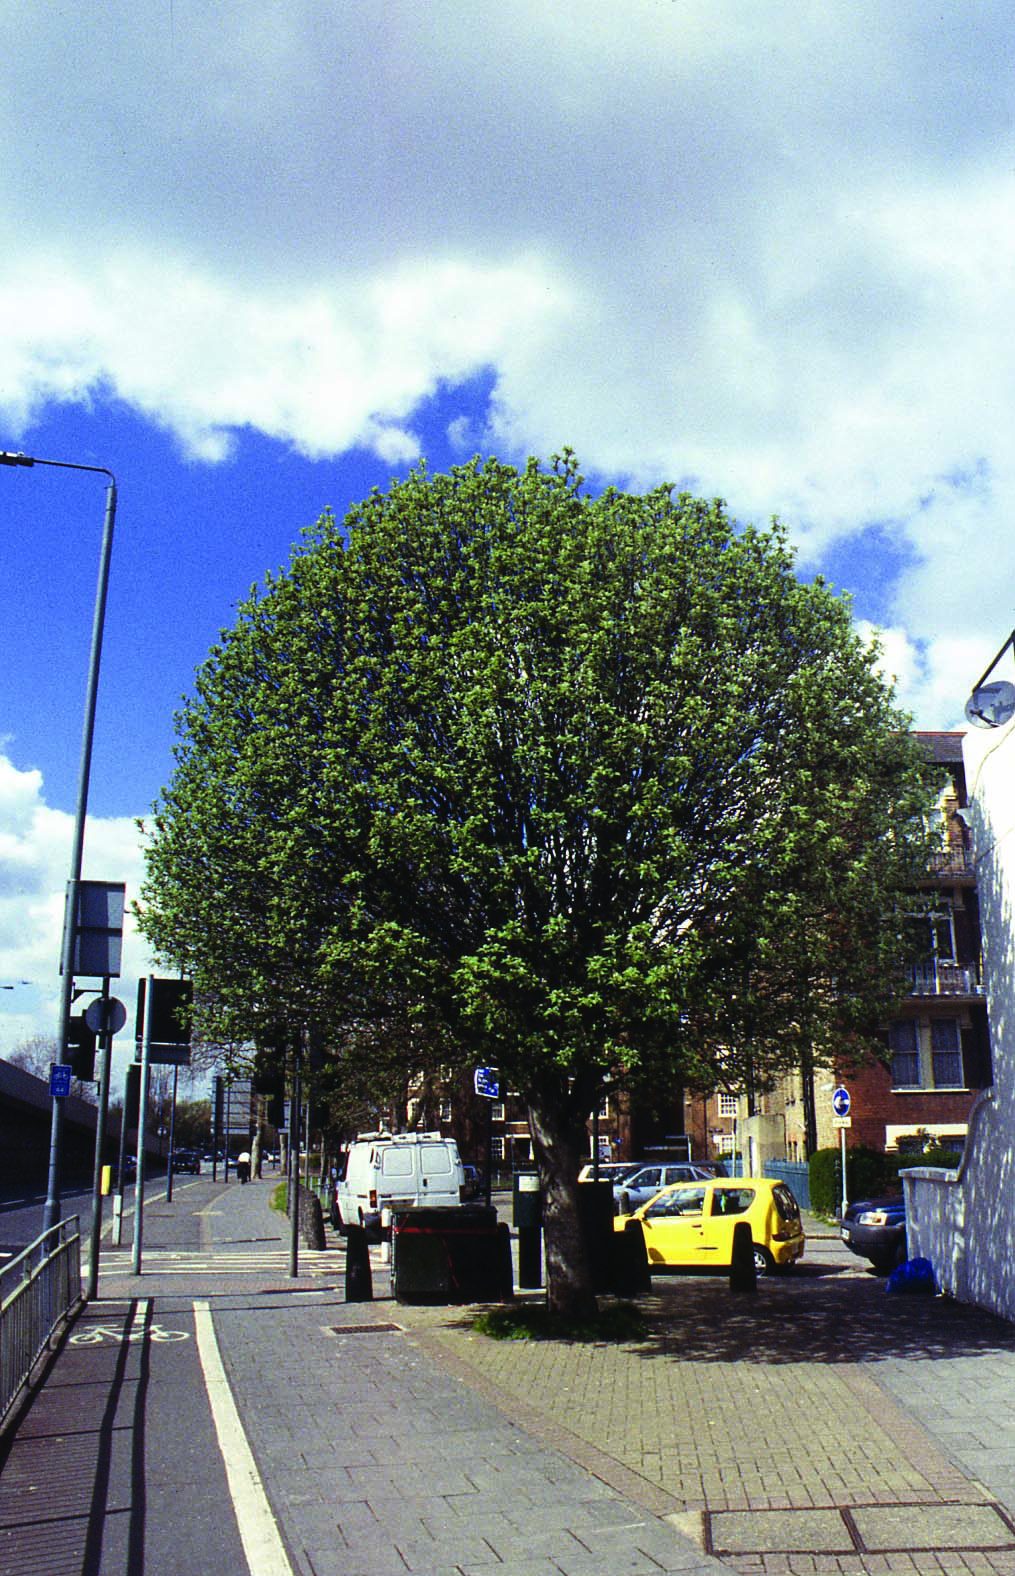 Sorbus x thuringiaca Fastigiata mature tree on street